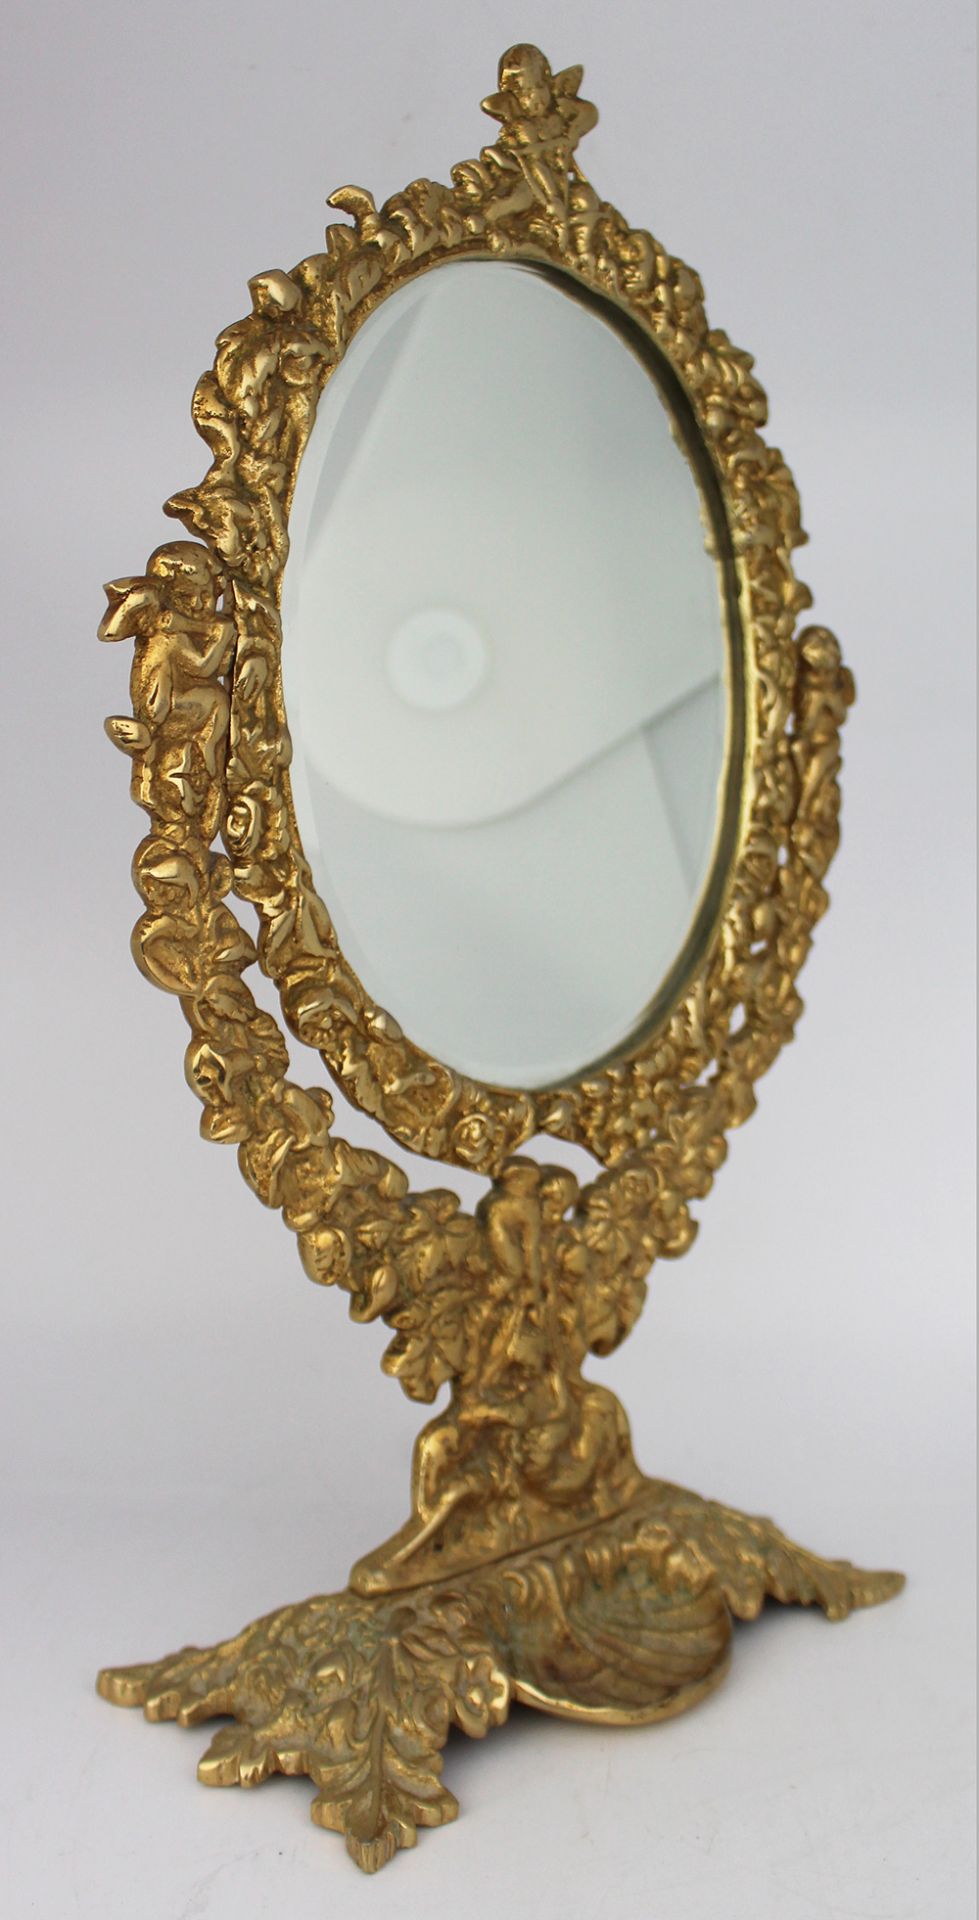 Ornate Vintage Brass Cherub Vanity Table Mirror - Image 2 of 6